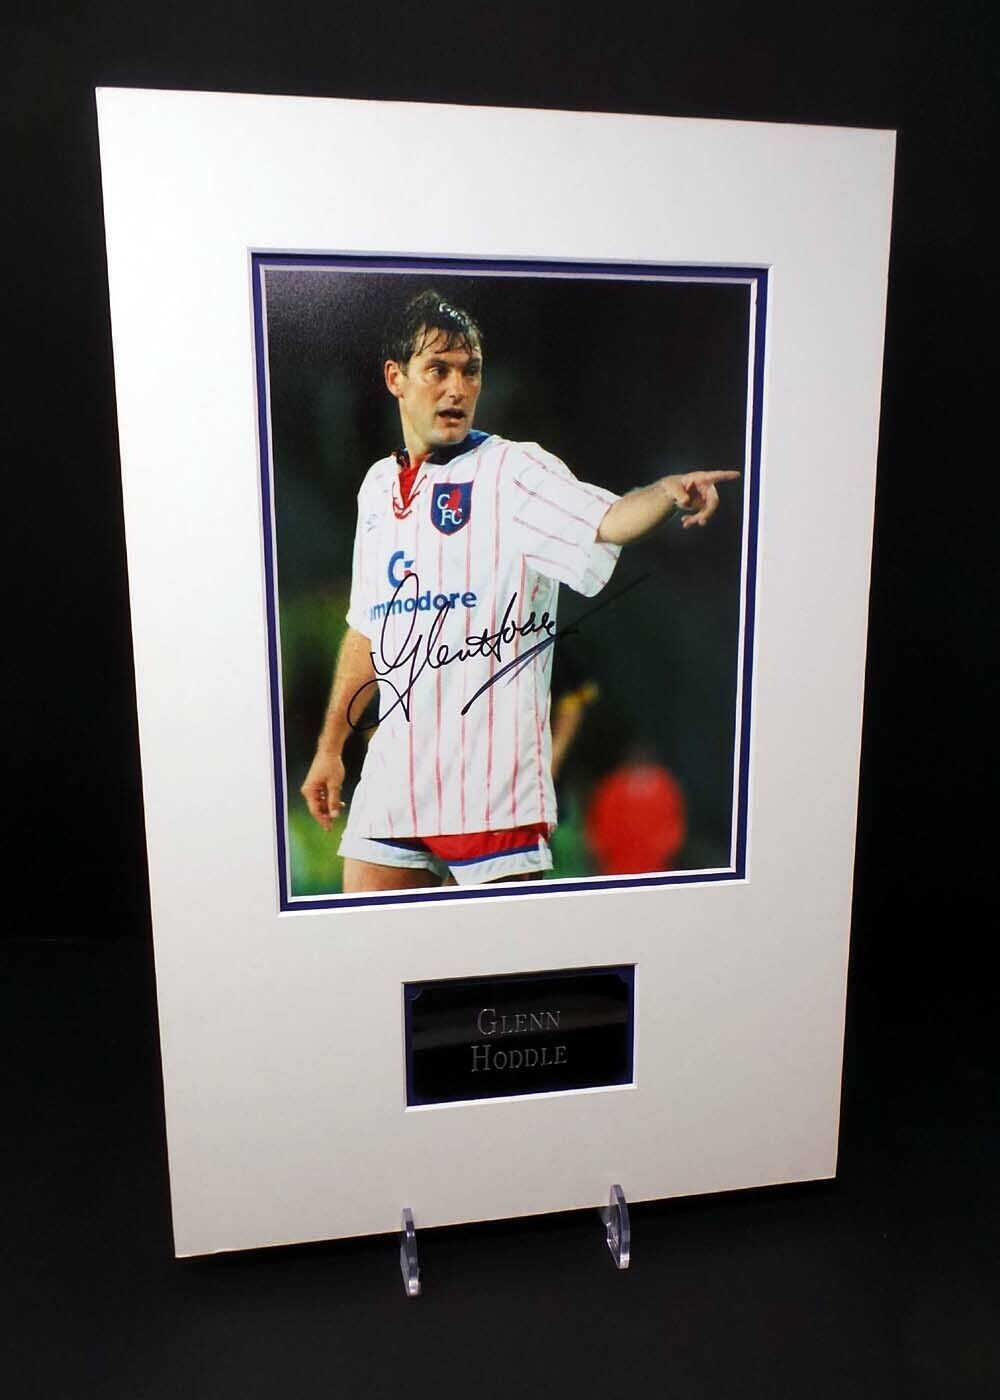 Glenn HODDLE Signed & Mounted 10x8 Photo Poster painting AFTAL RD COA Chelsea Football Legend